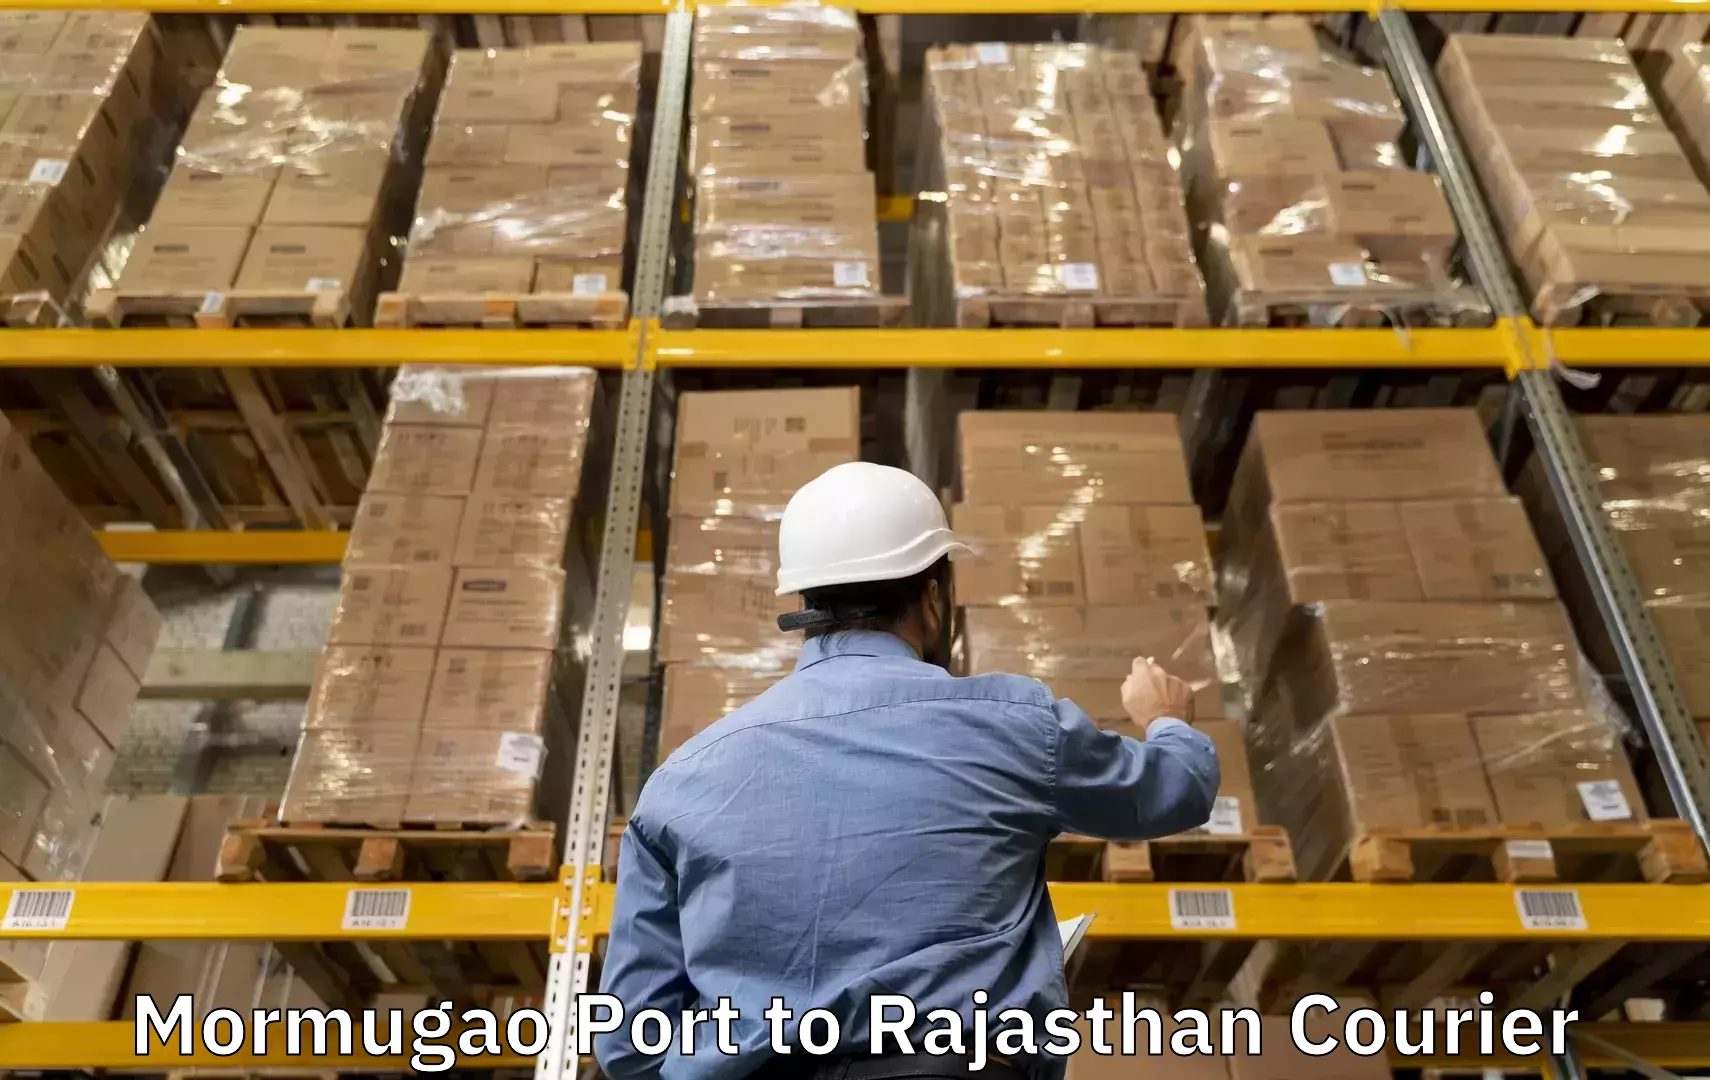 Baggage relocation service Mormugao Port to Tijara